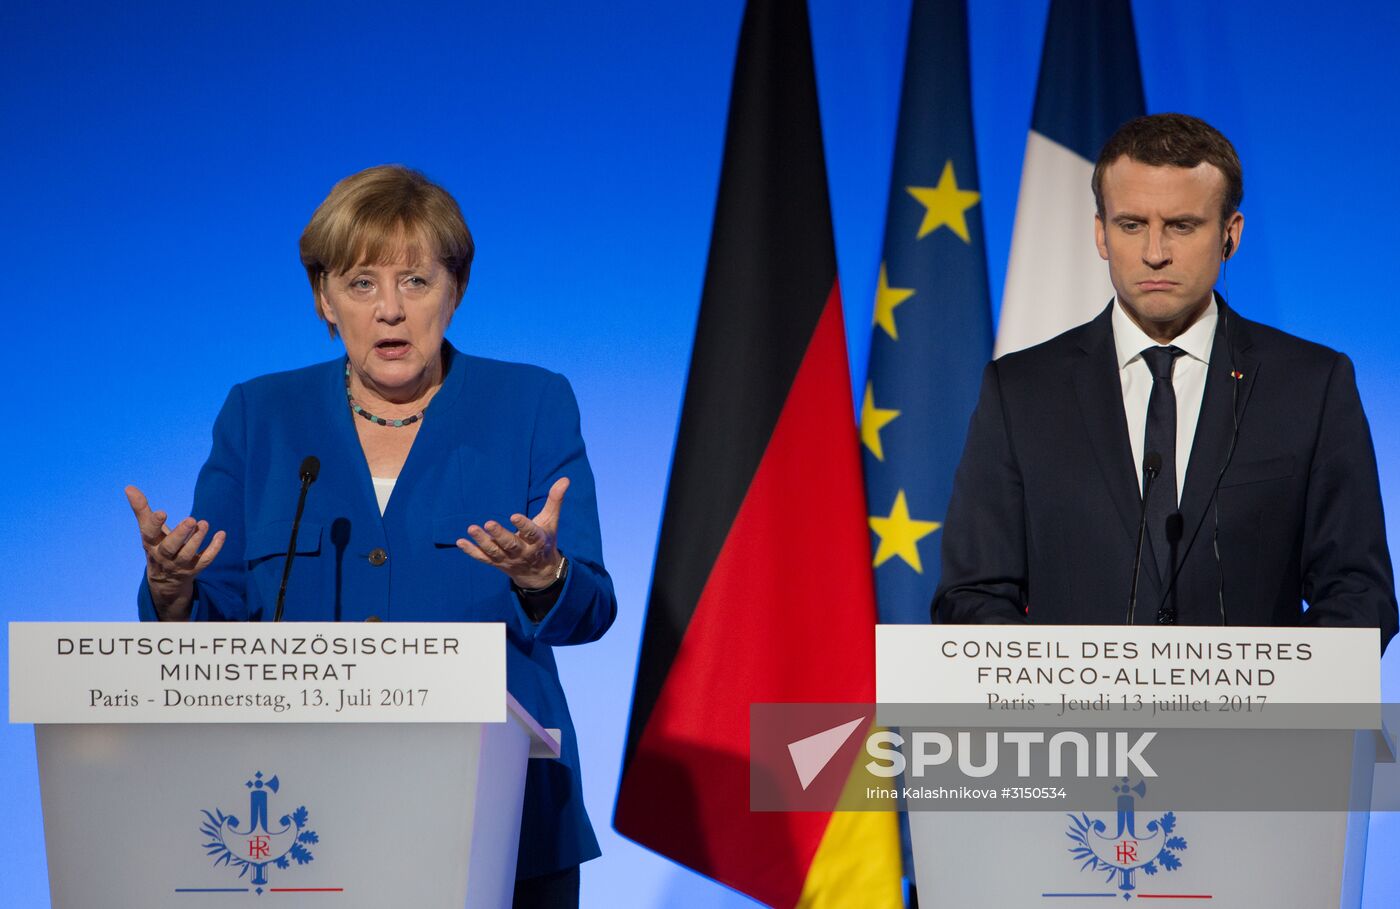 Emmanuel Macron and Angela Merkel's press conference in Paris